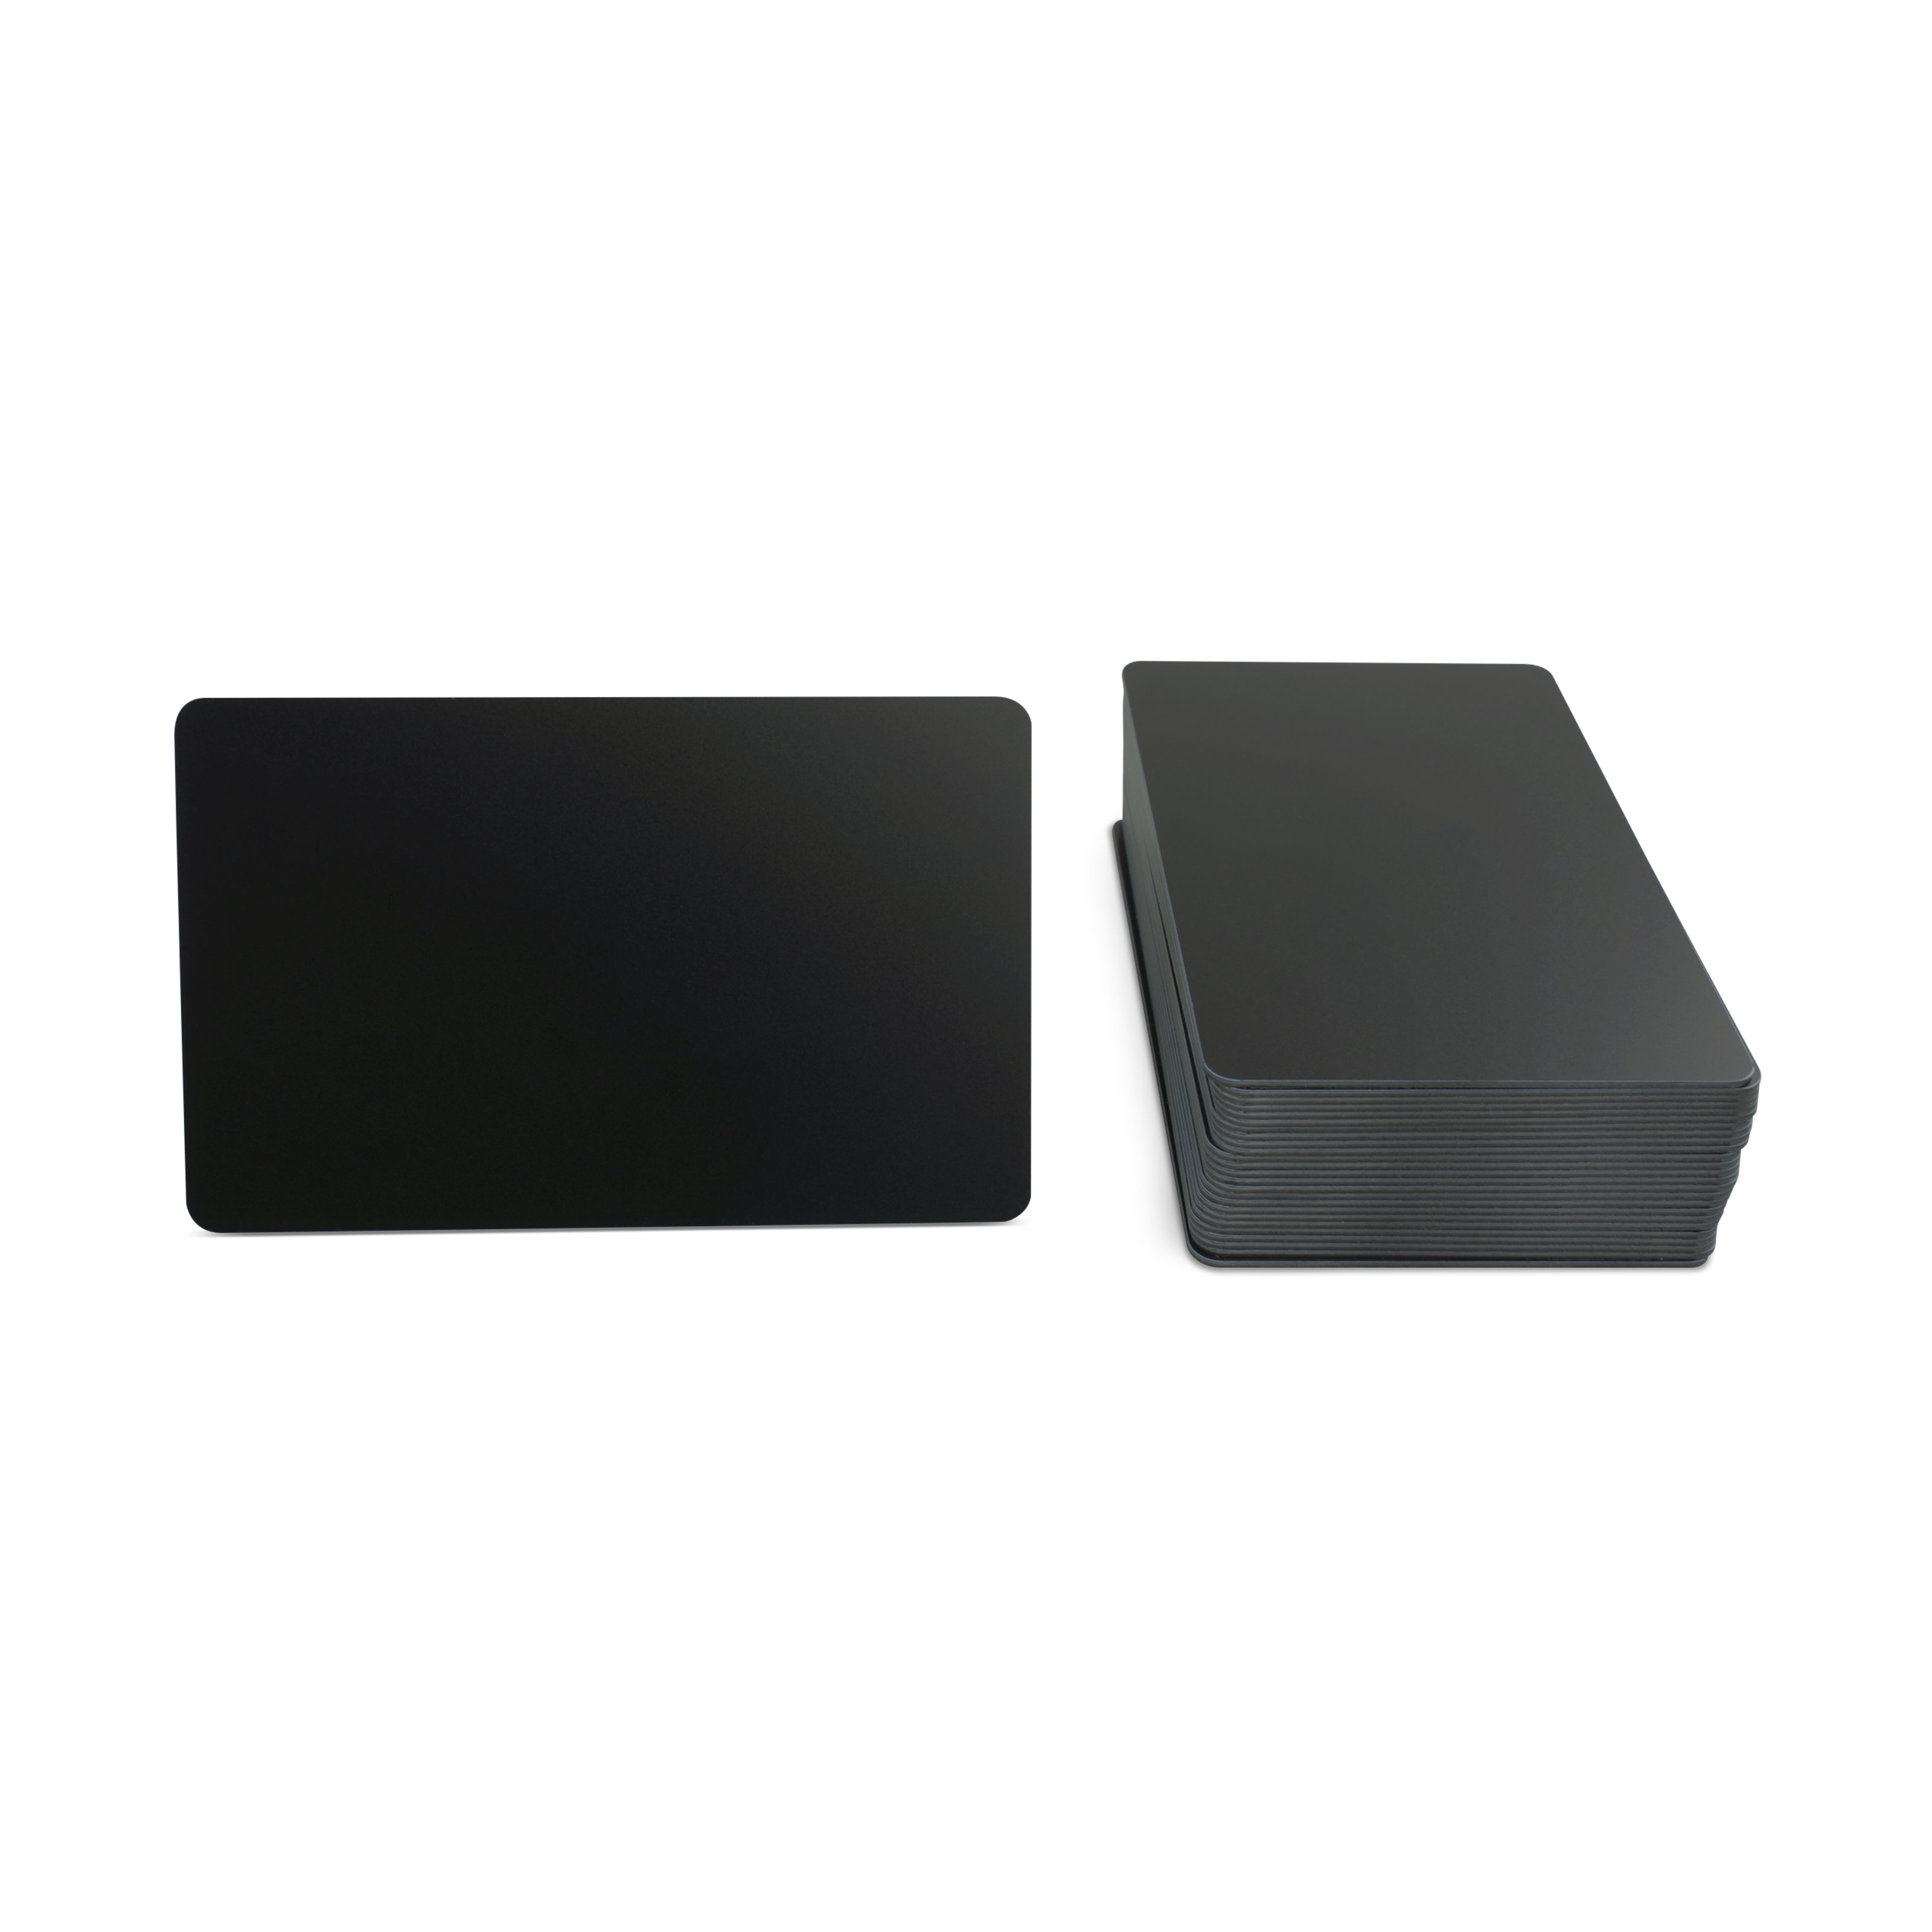 NFC Karte PVC - 85,6 x 54 mm - NTAG216 - 924 Byte - schwarz matt